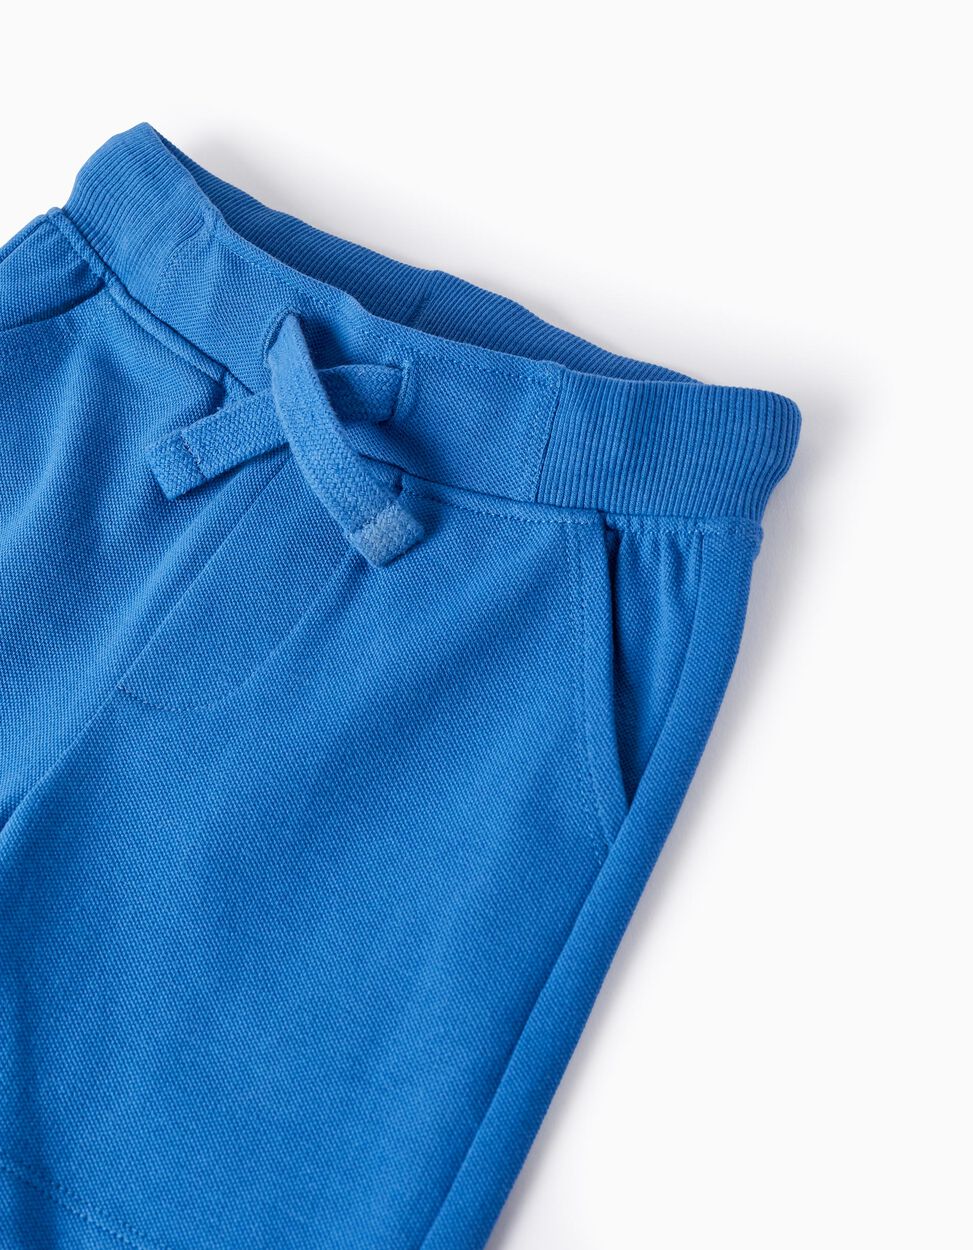 Buy Online Cotton Piqué Shorts for Baby Boys, Blue